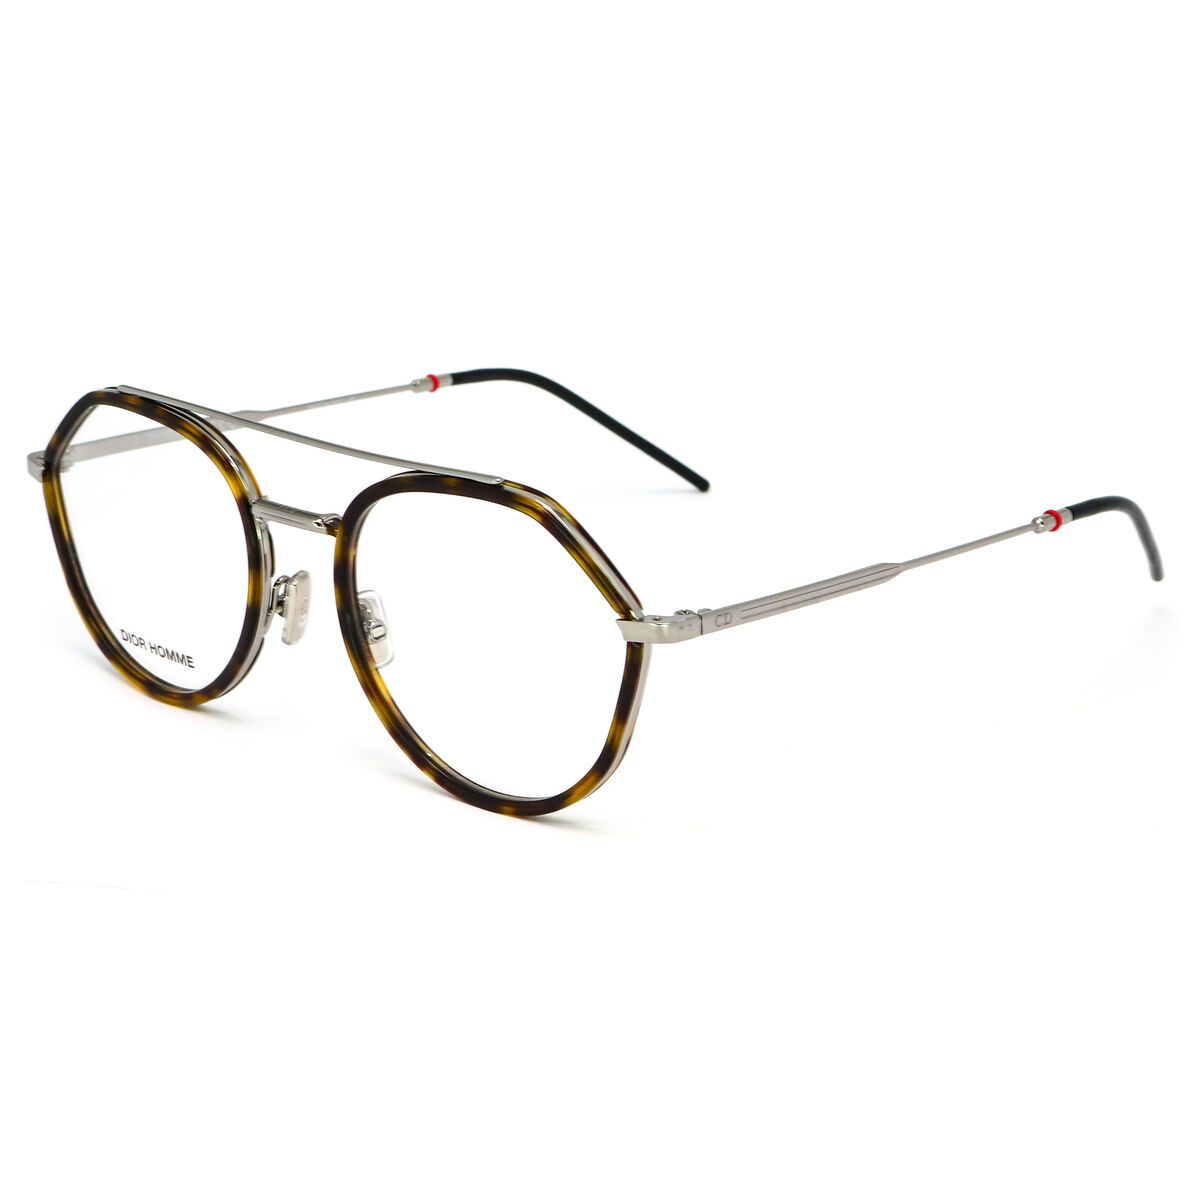 DIOR0219 Round Eyeglasses 3MA - size  52